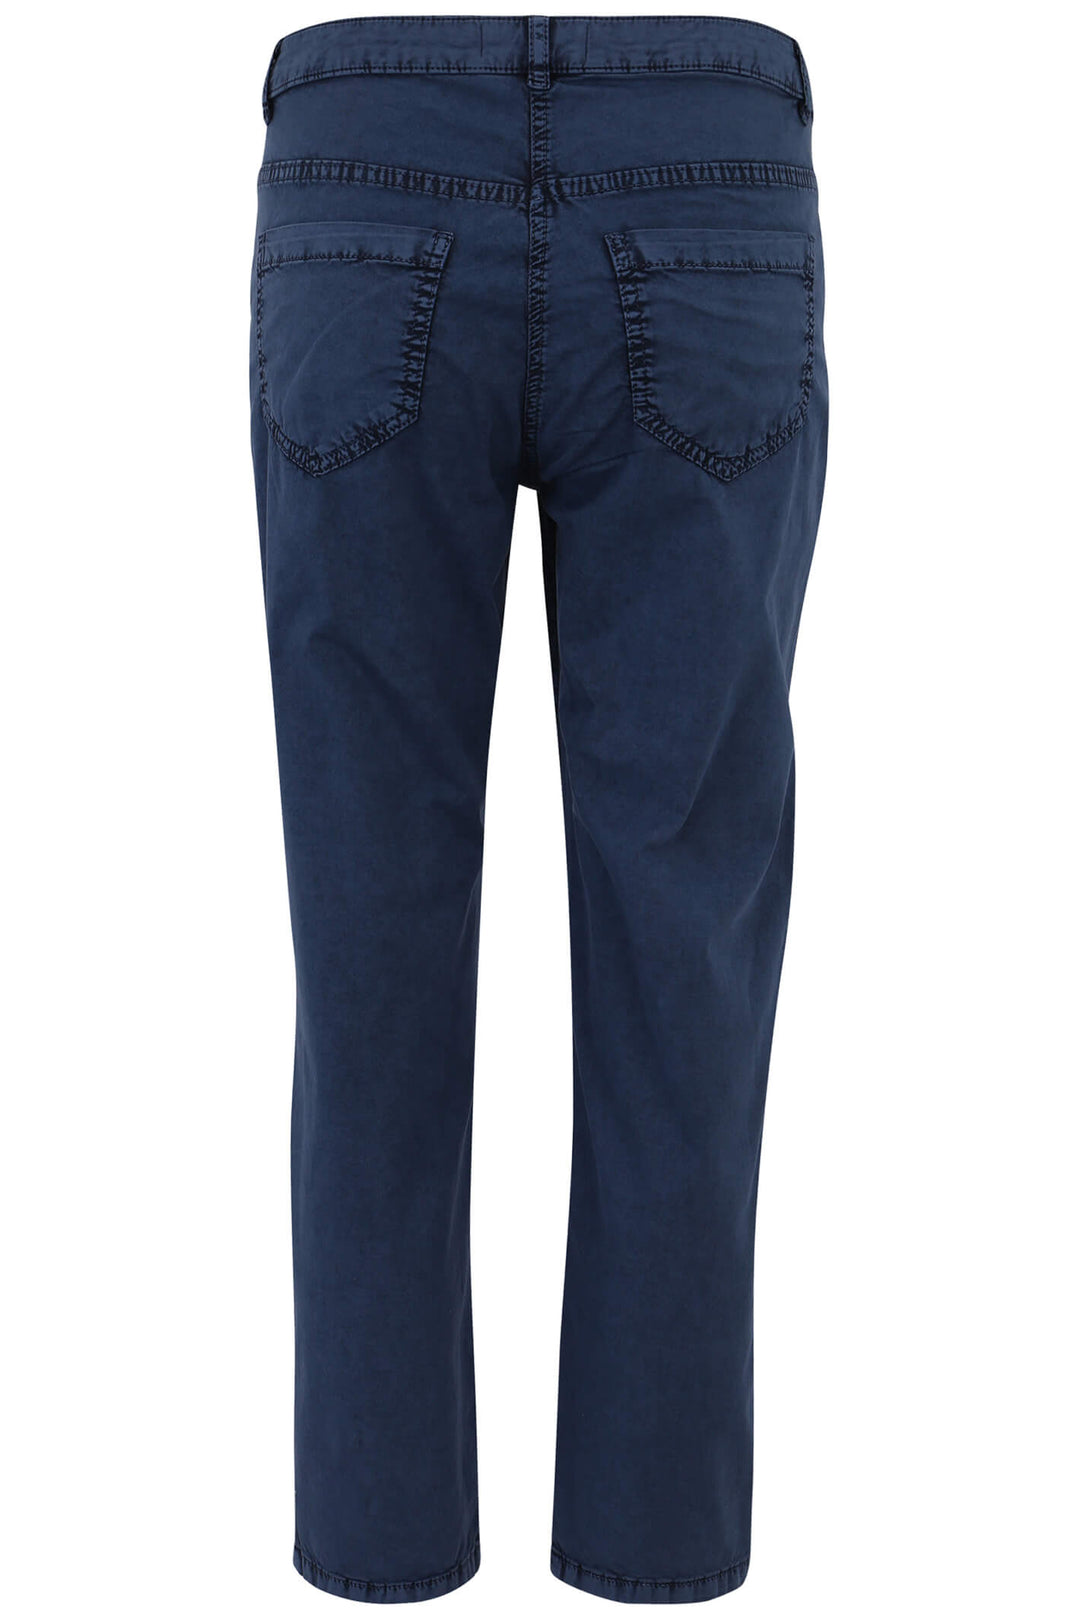 Doris Streich 877 198 Indigo Blue Five Pocket Jeans - SHirley Allum Boutique